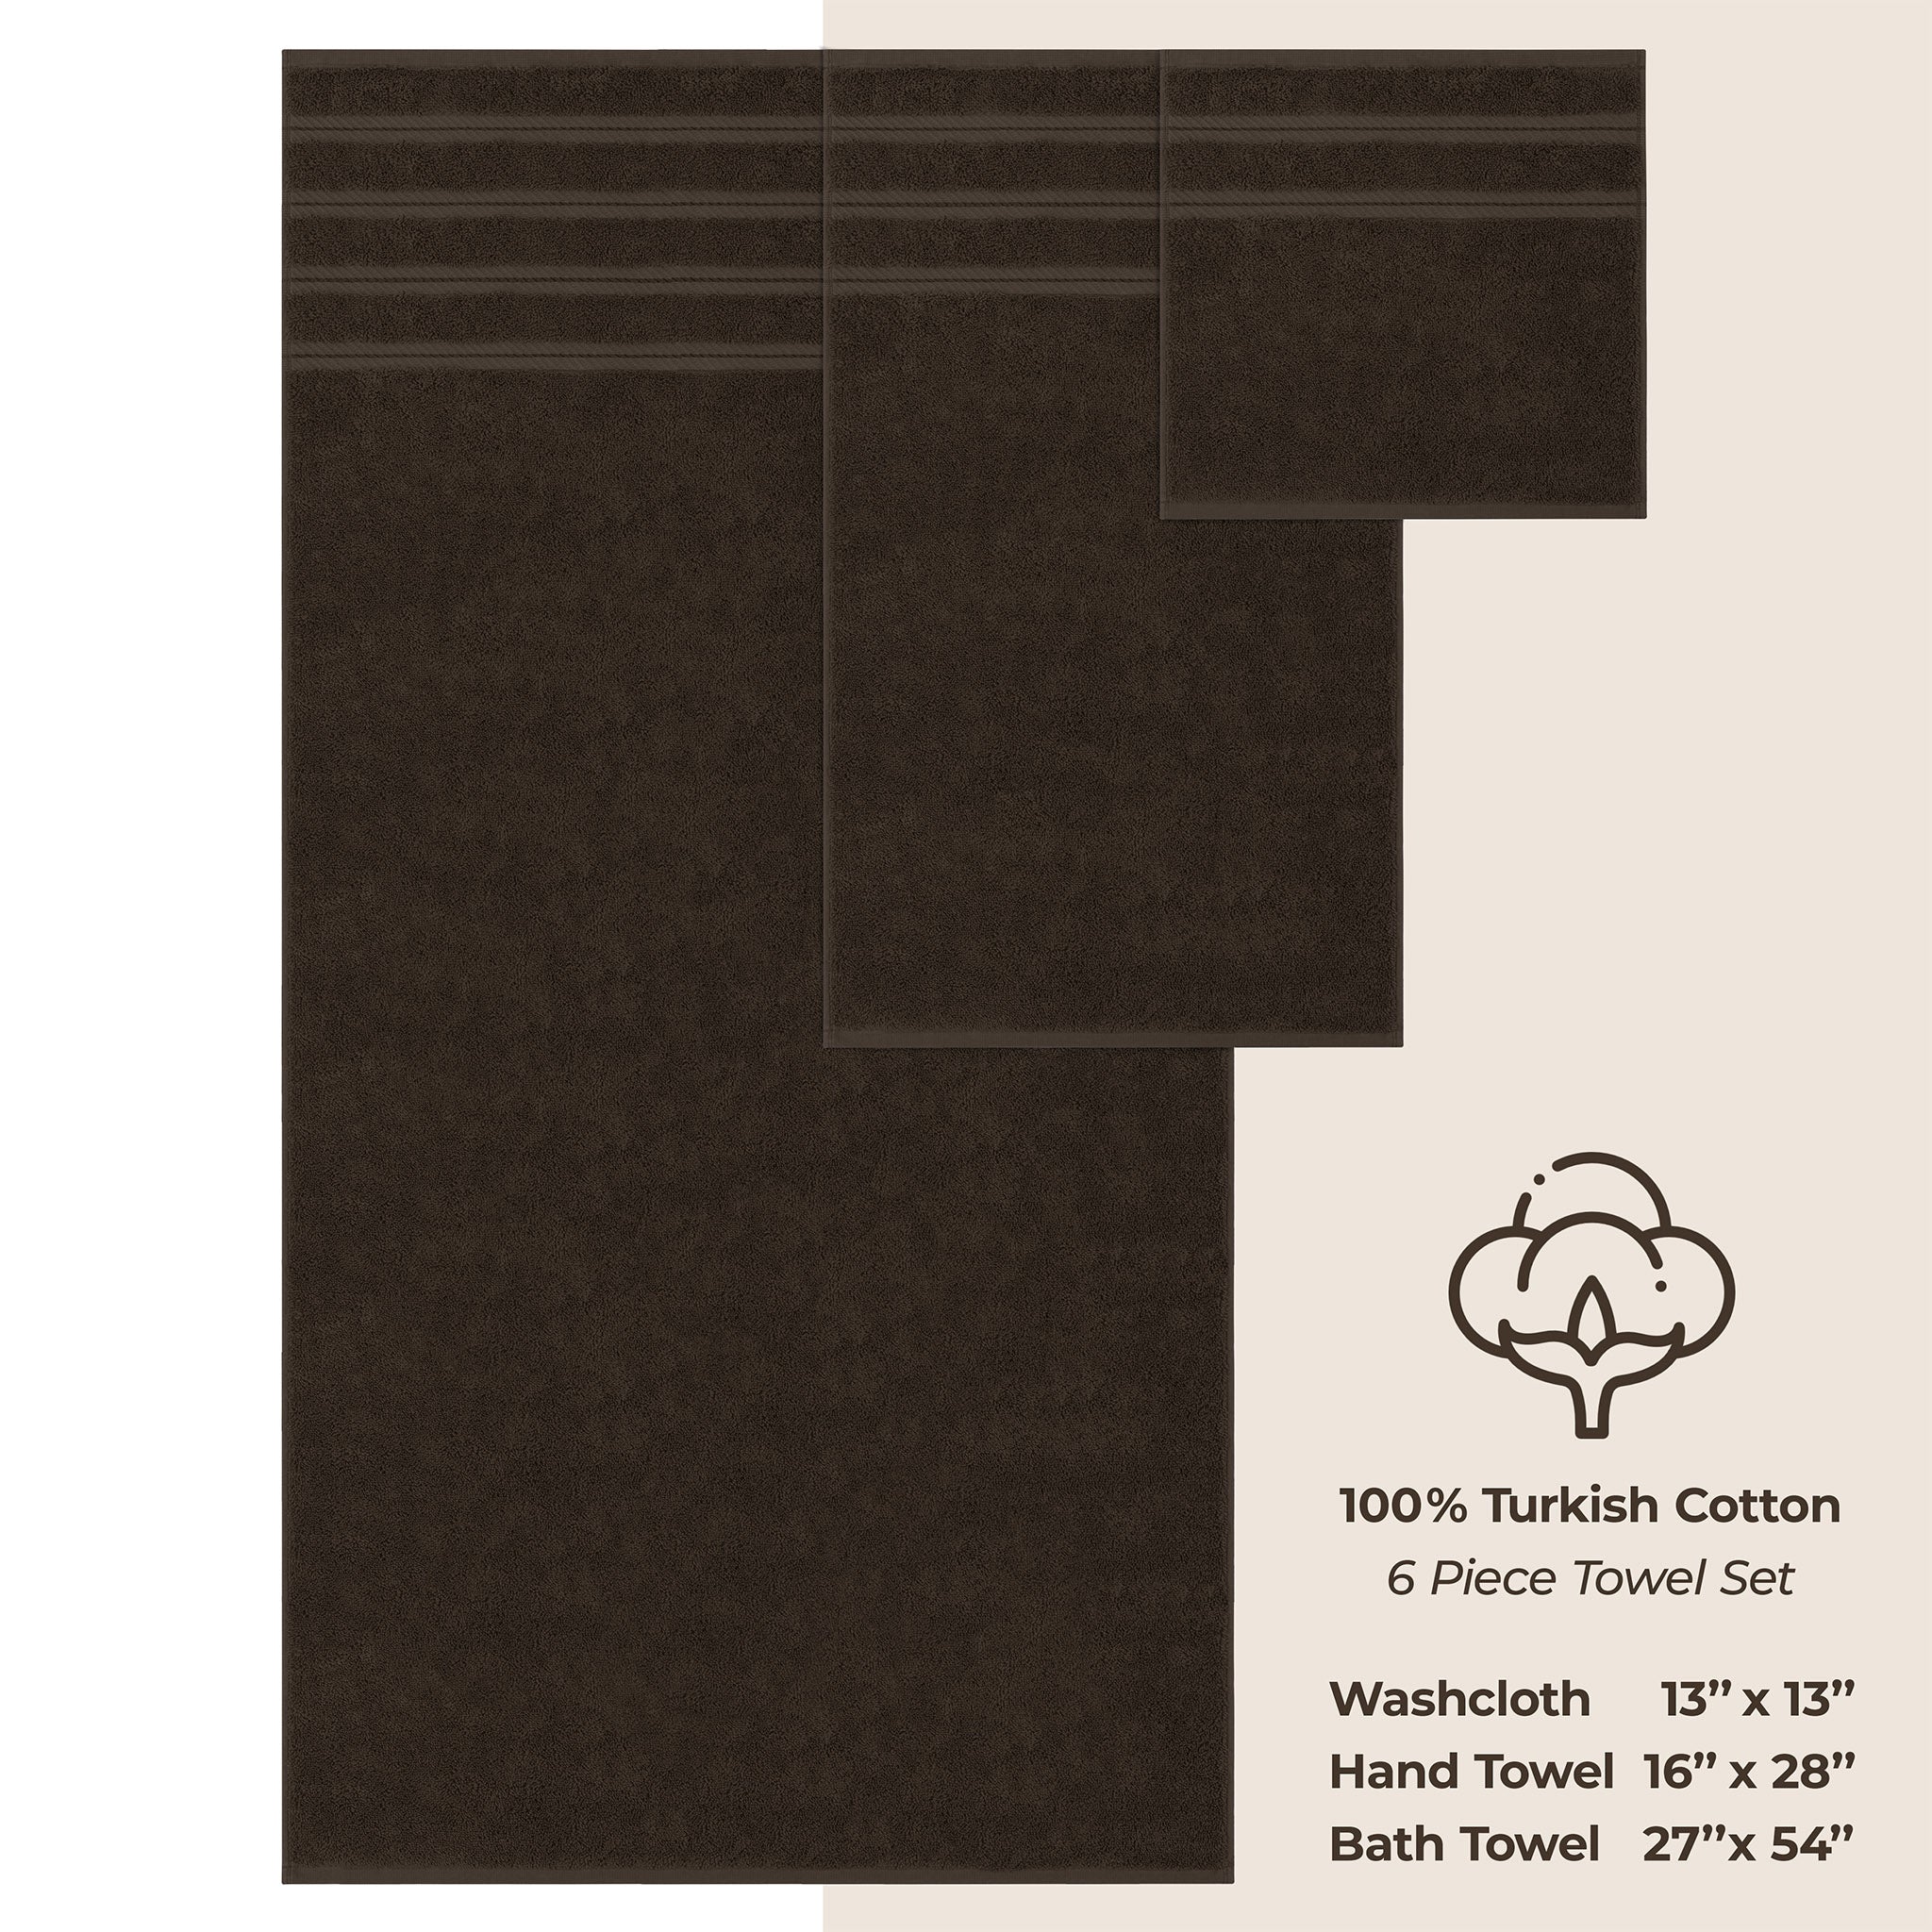 American Soft Linen 100% Turkish Cotton 6 Piece Towel Set Wholesale chocolate-brown-4